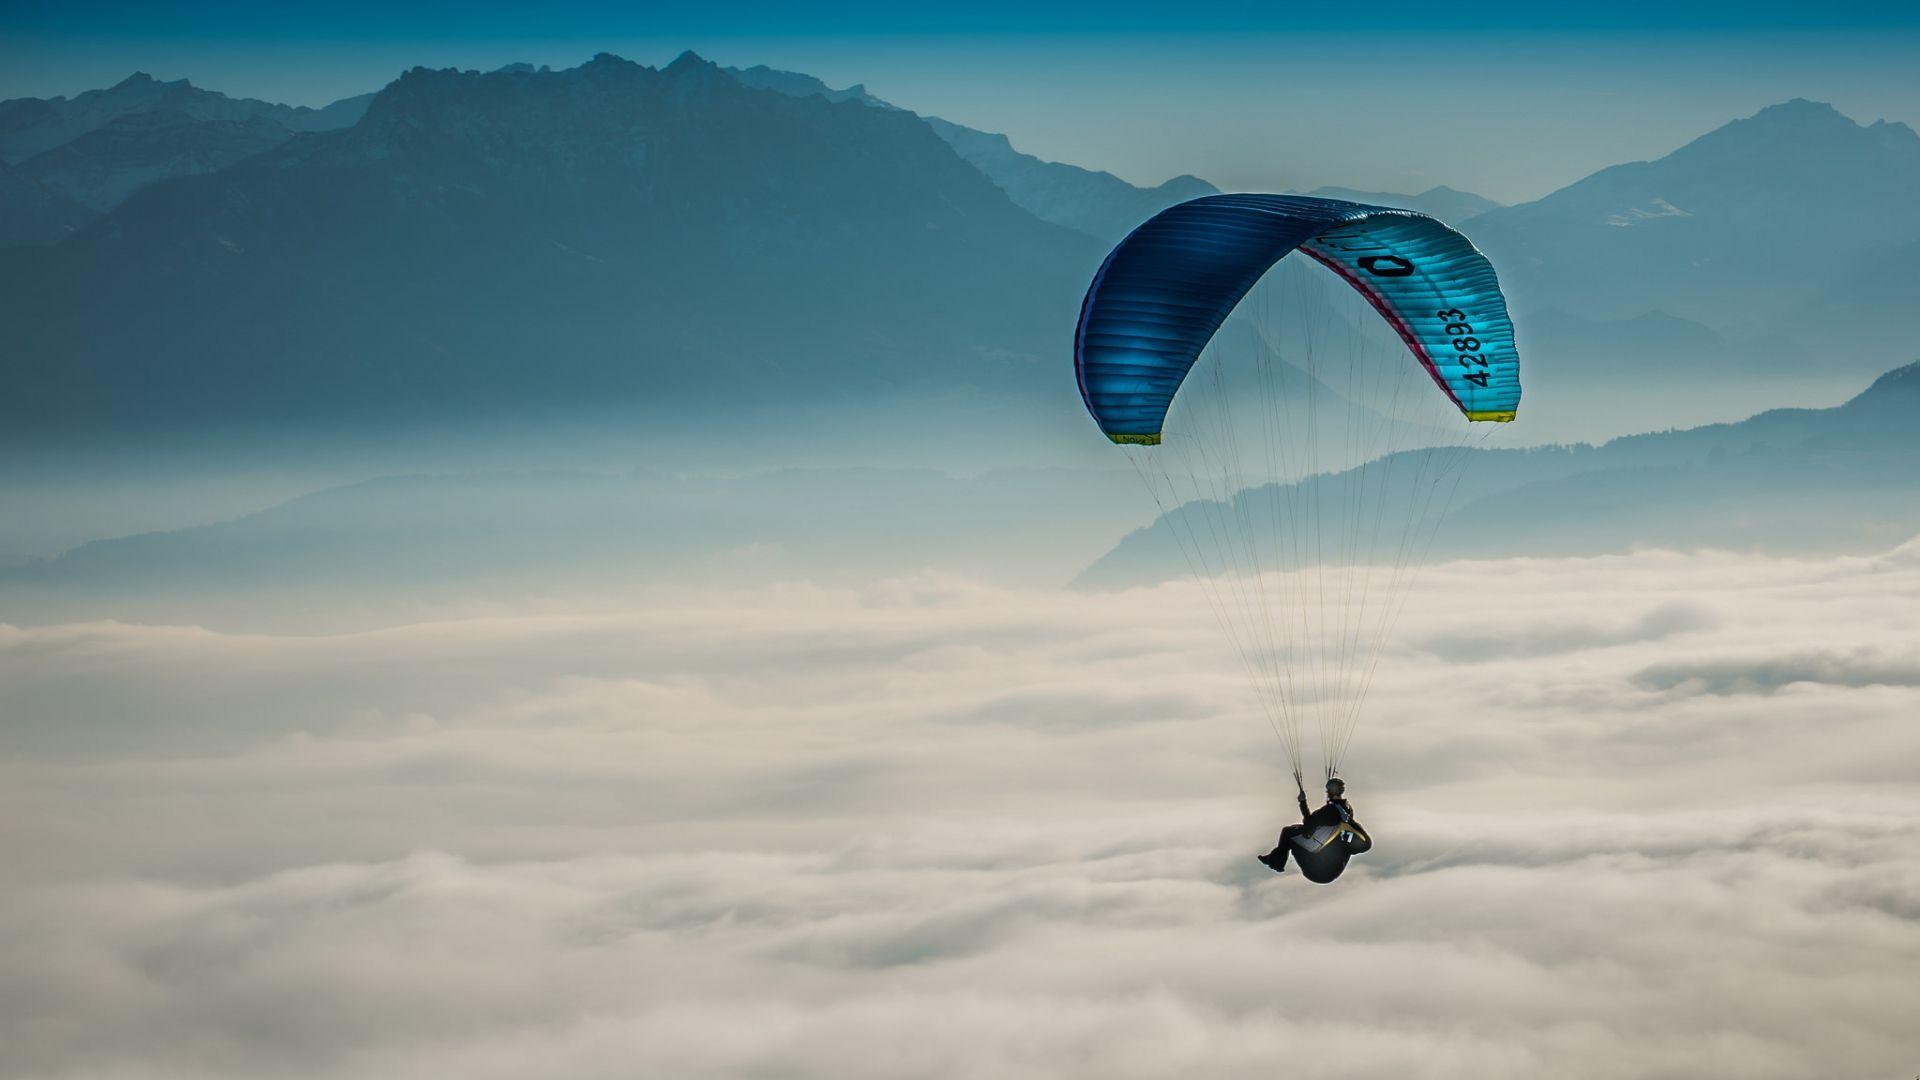 Paragliding Wallpaper 1920x1080